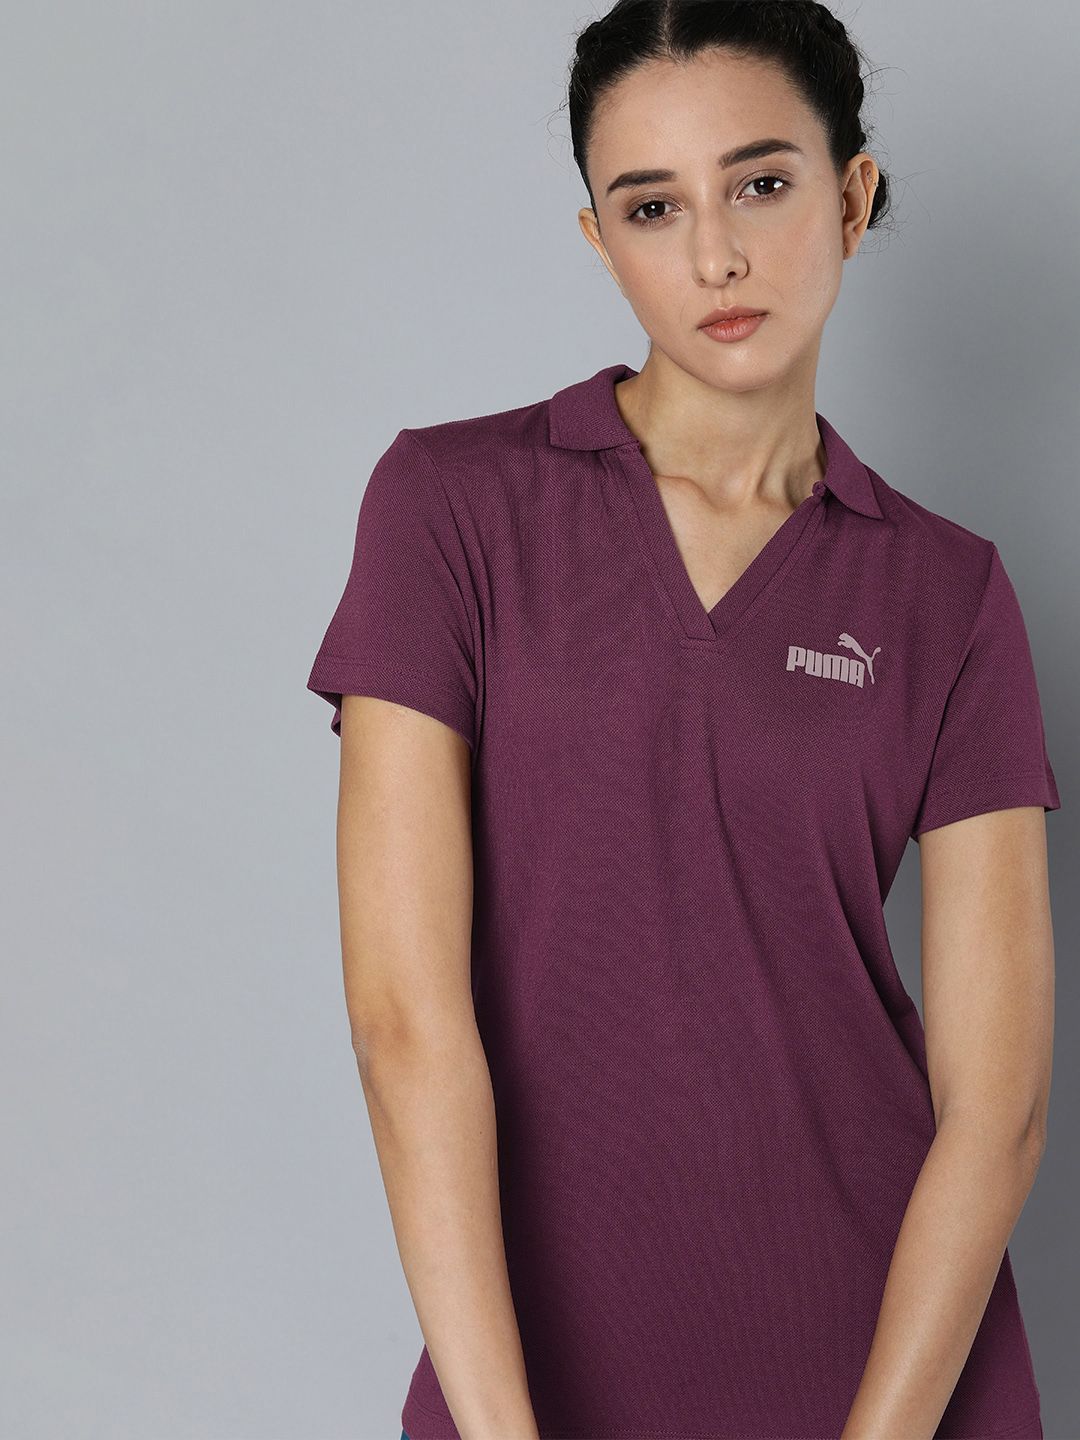 Puma Women Burgundy Self Design V-Neck Essential Applique T-shirt Price in India